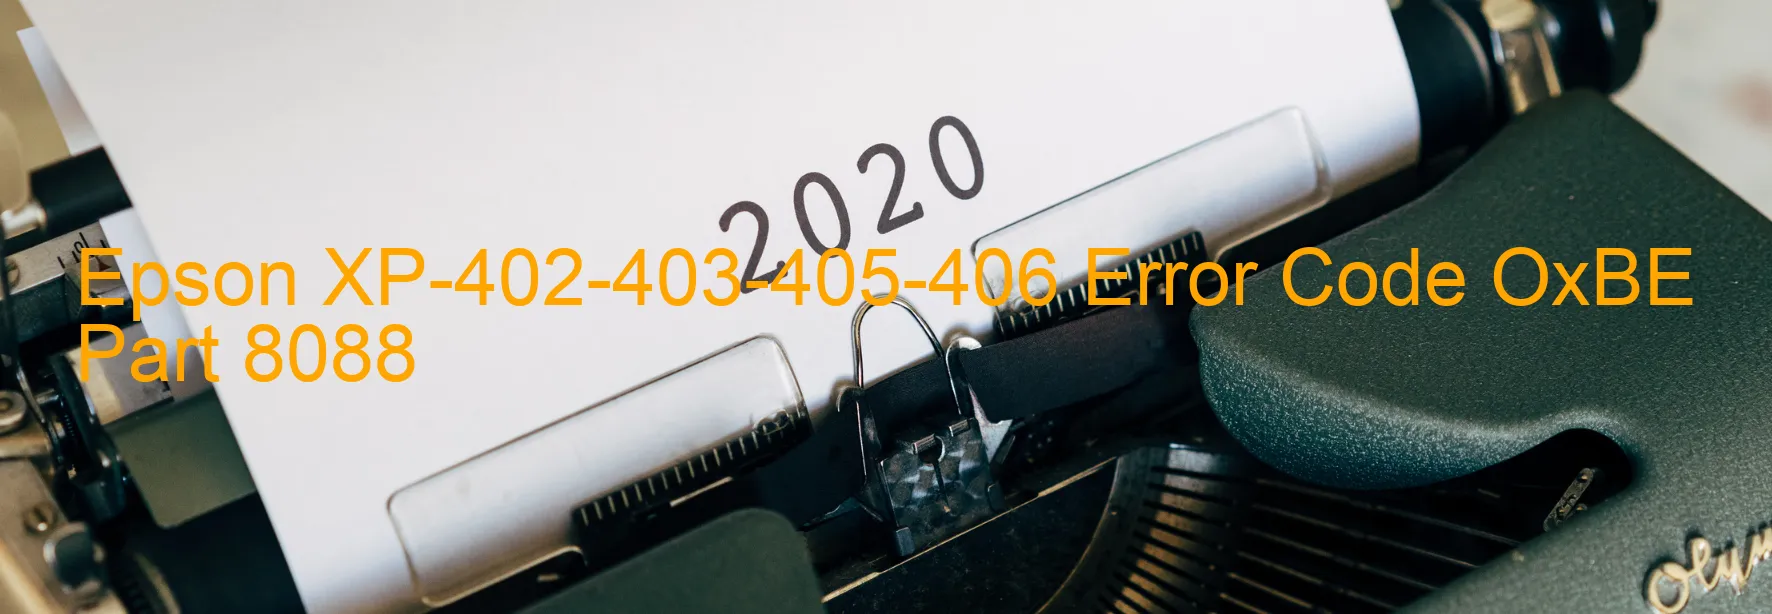 Epson XP-402-403-405-406 Error Code OxBE Part 8088